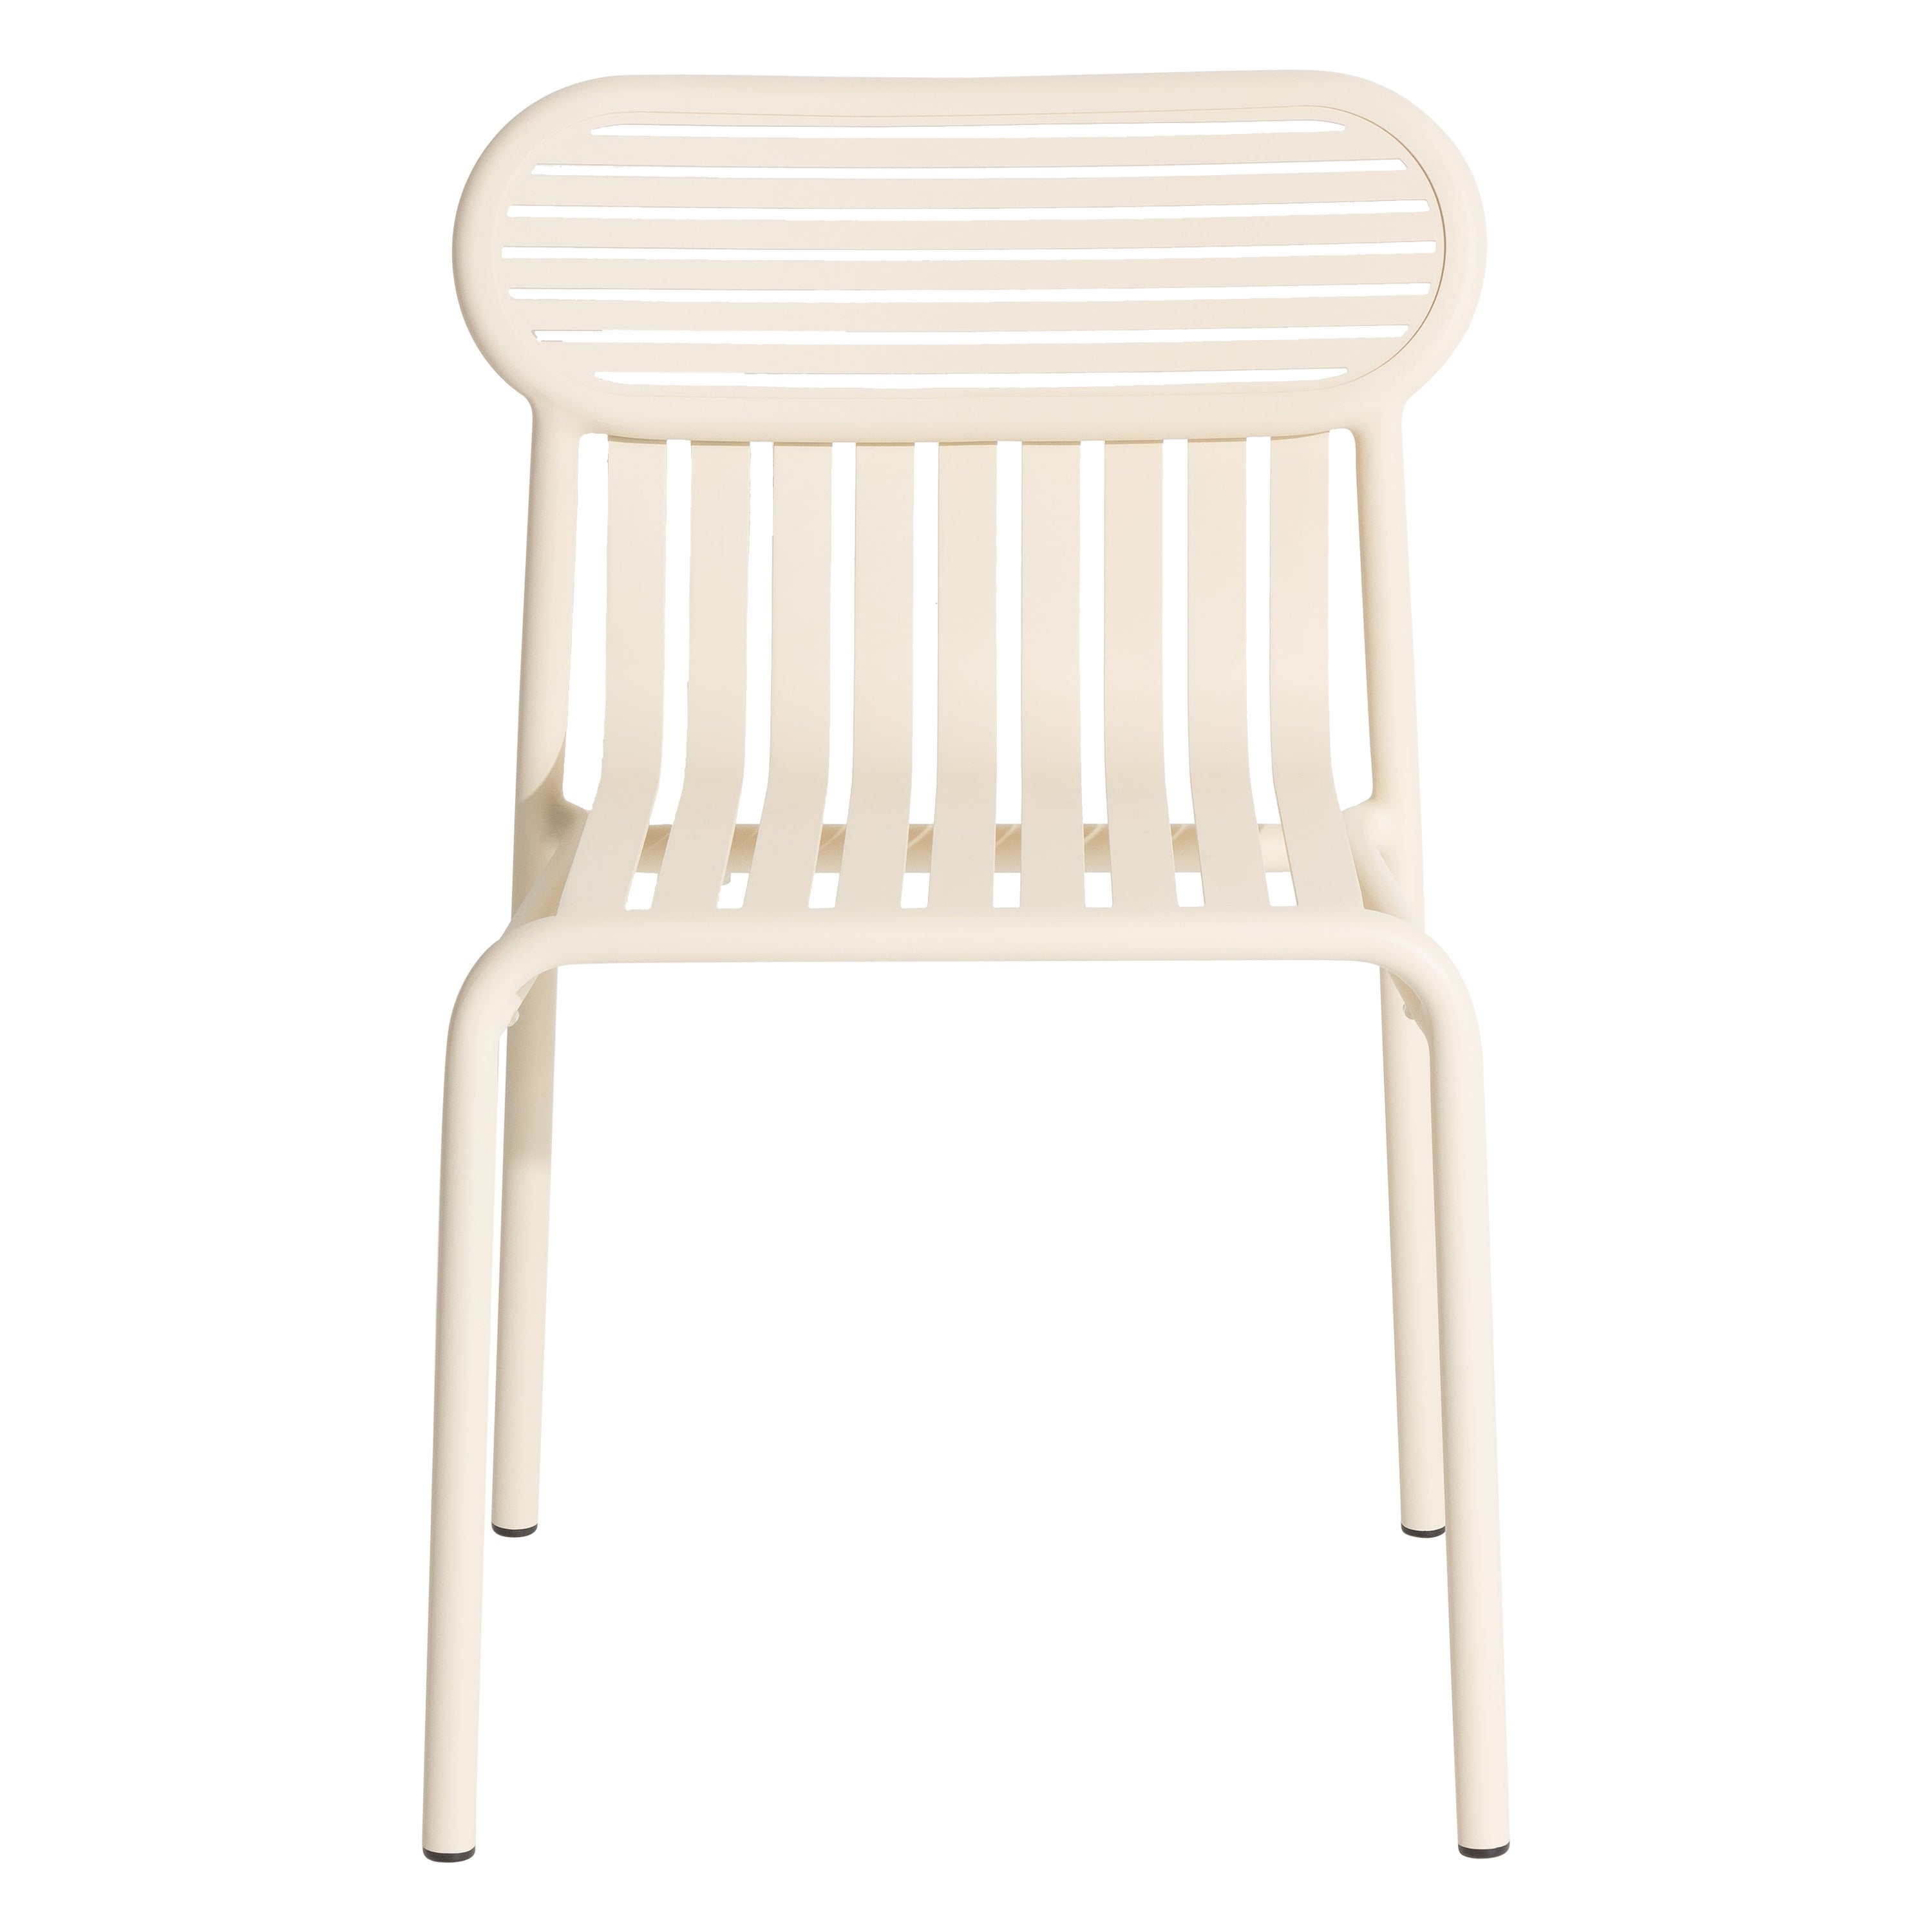 Studio Brichet-Ziegler Chairs